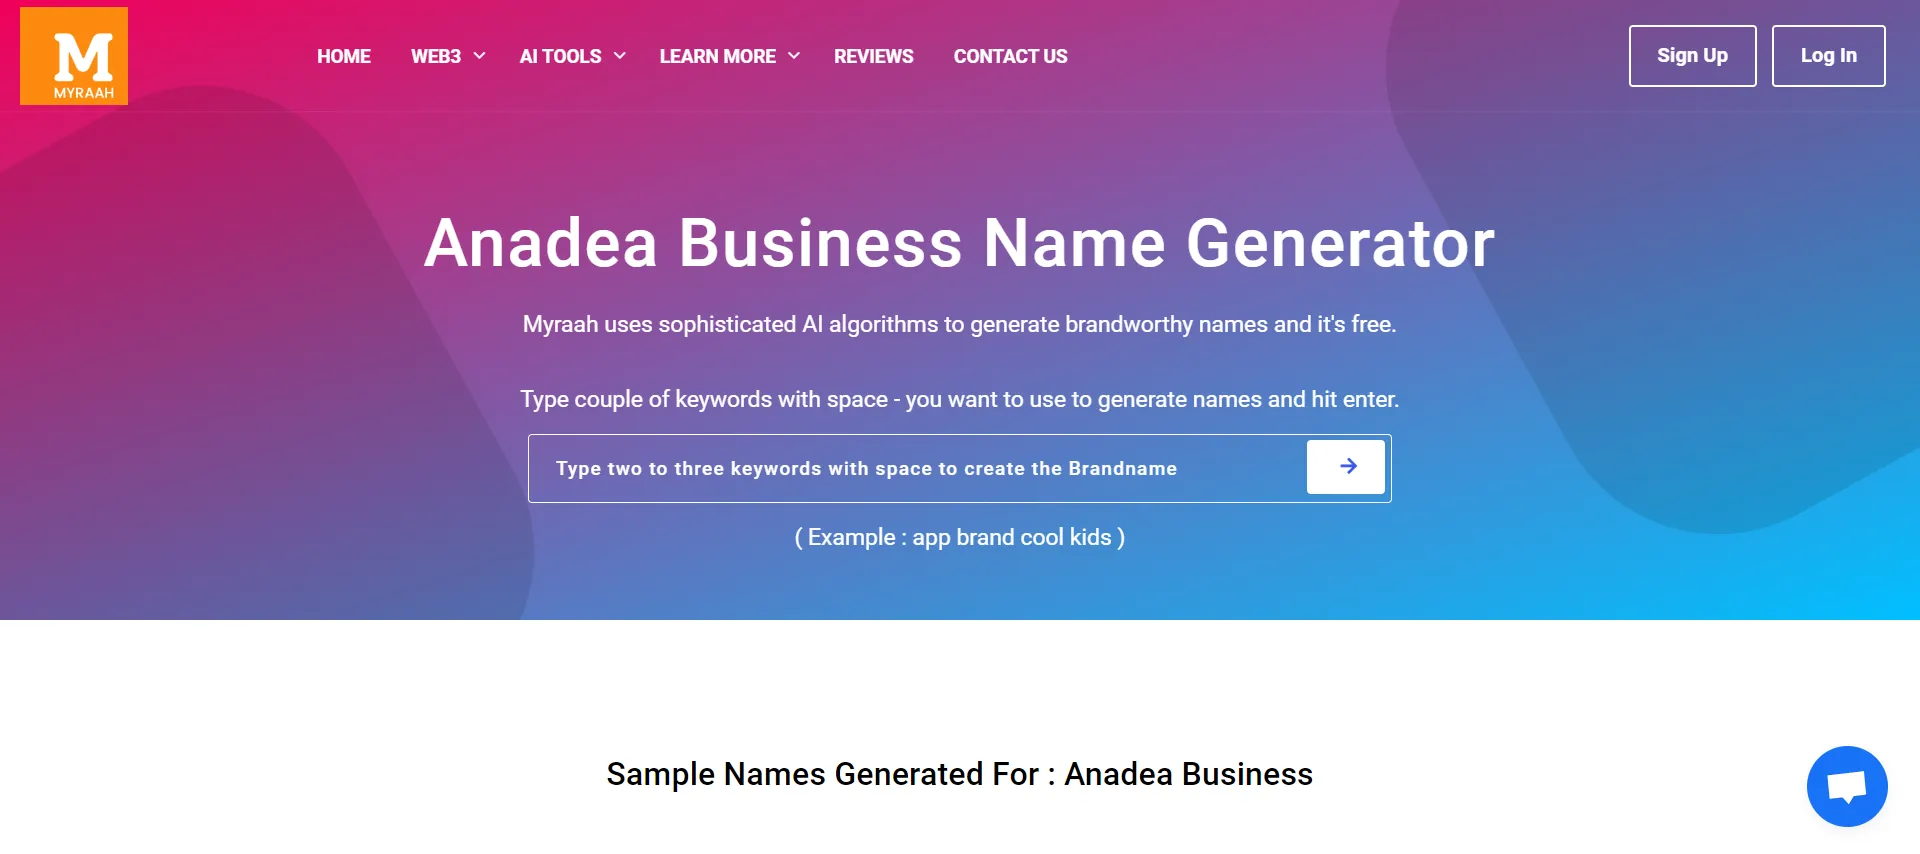 Anadea's free business name generator